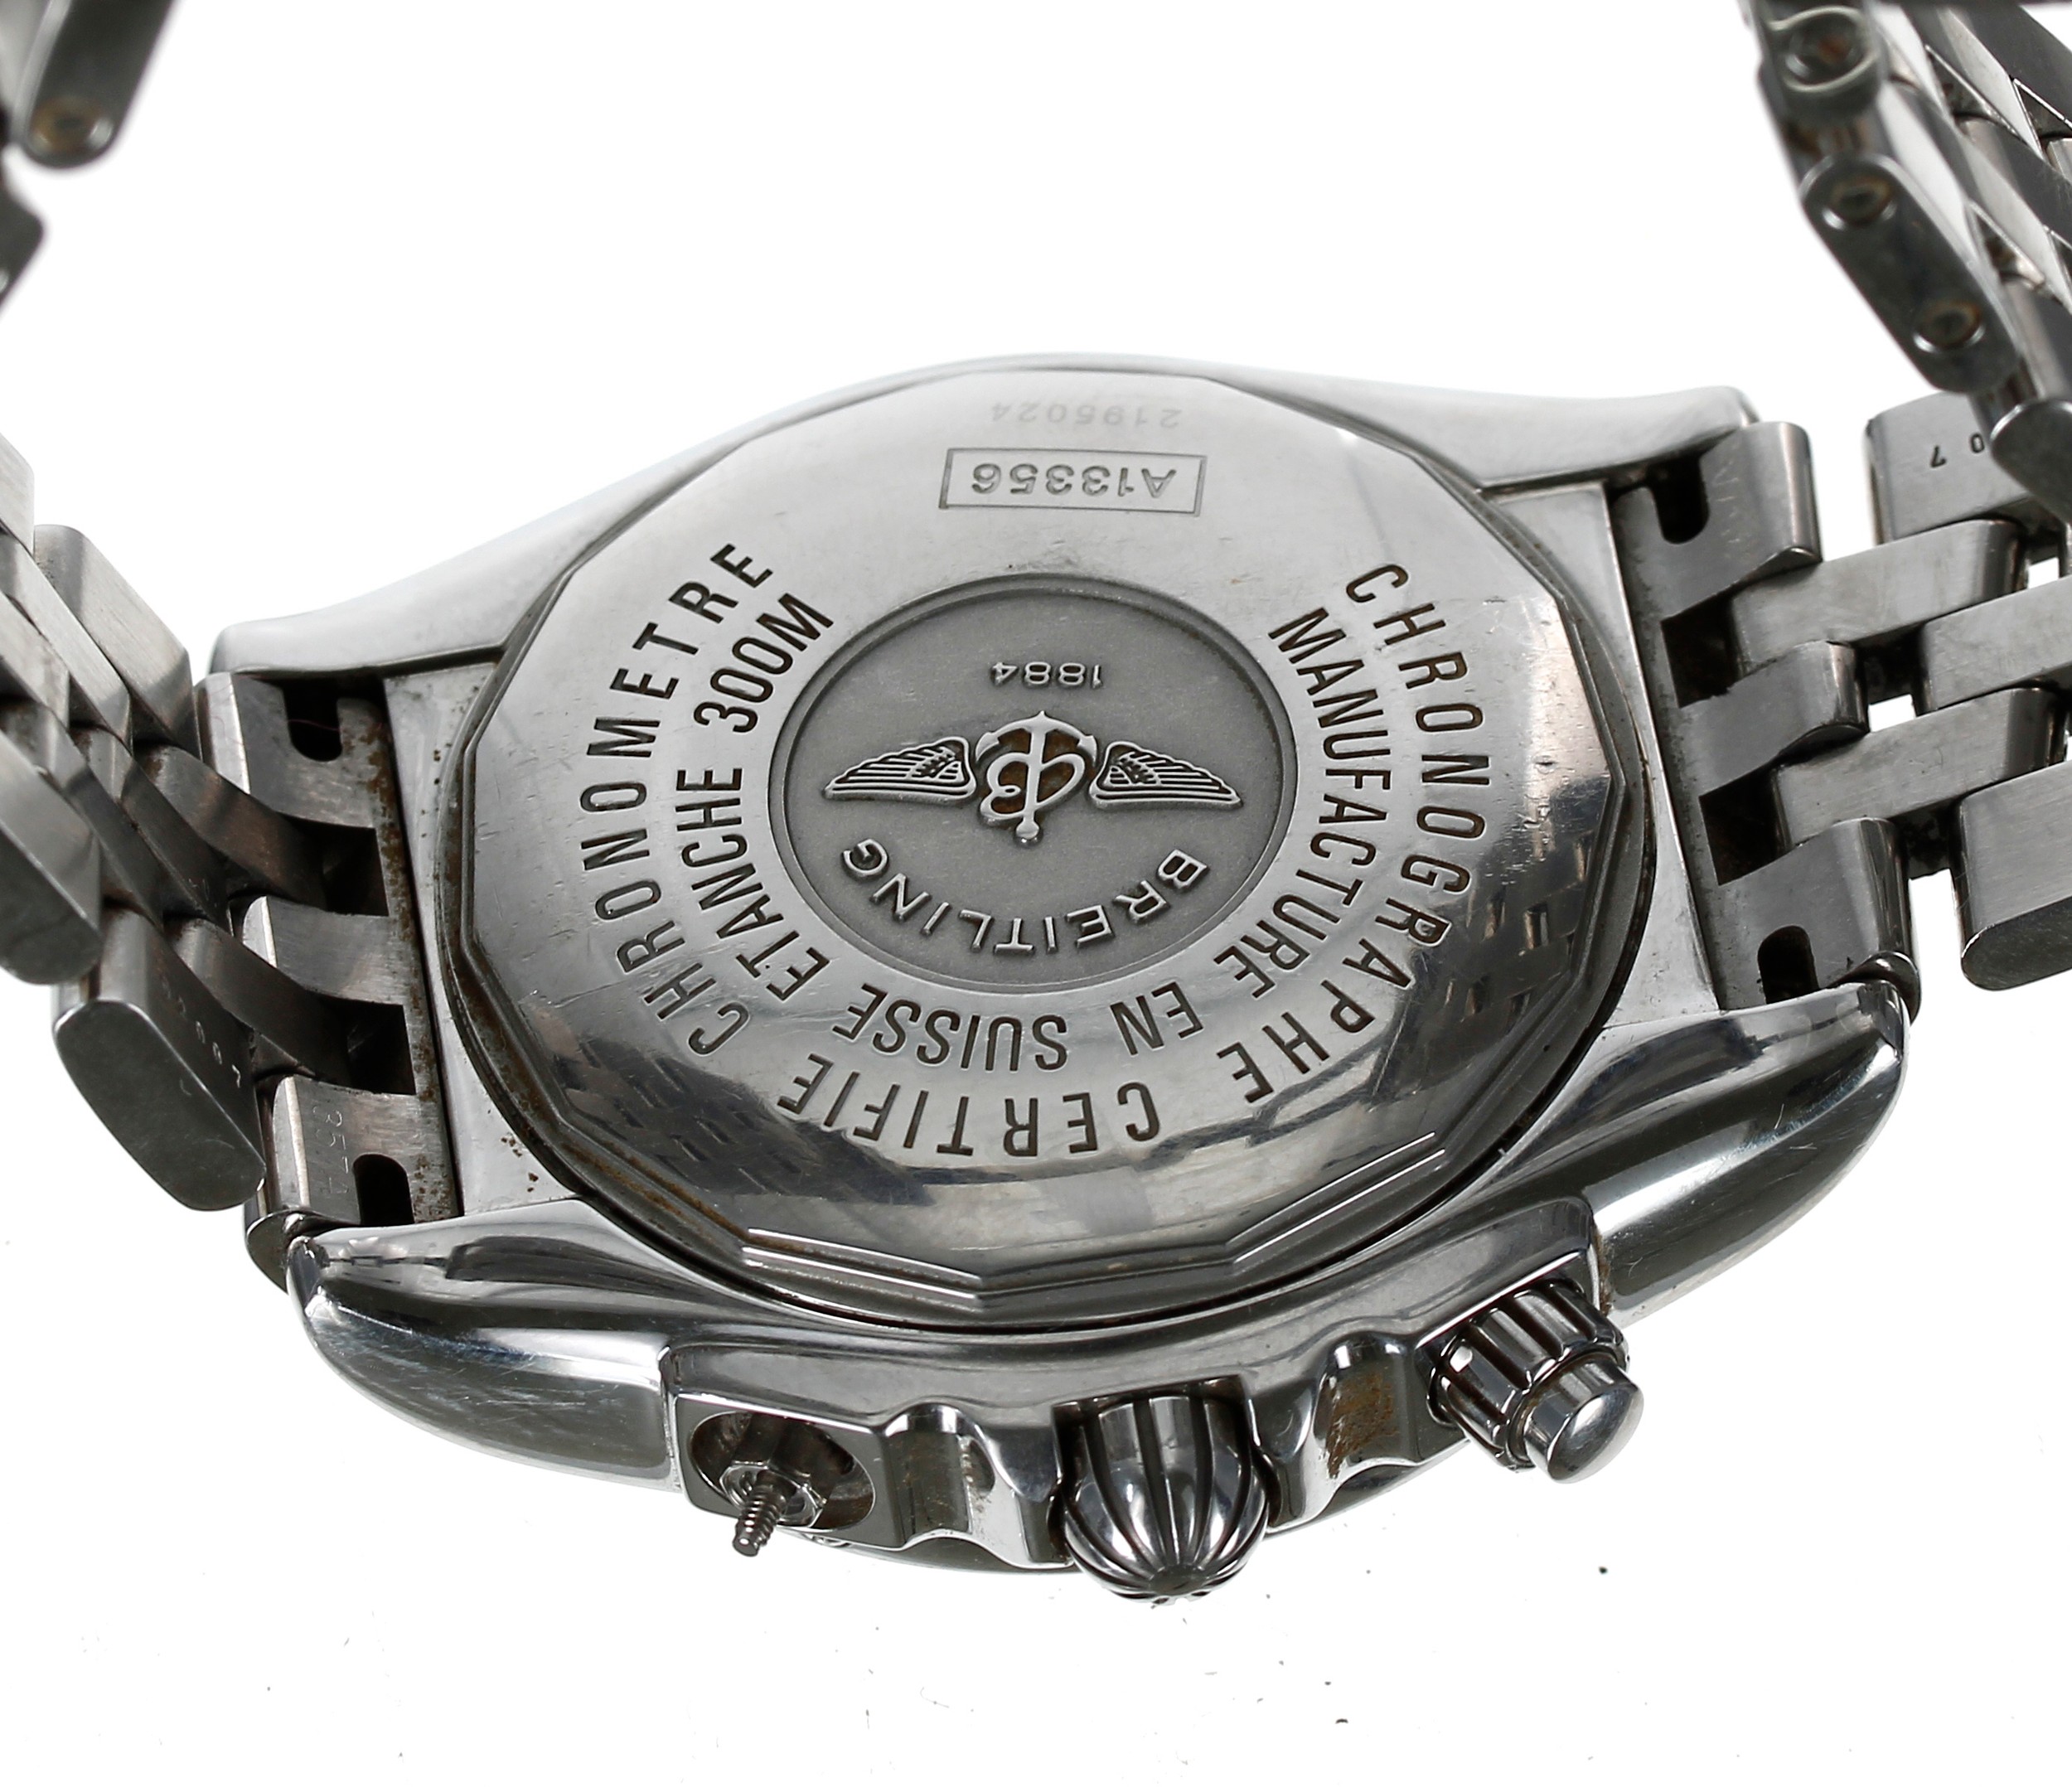 Breitling Chronomat Evolution Chronograph Chronometre automatic stainless steel gentleman's - Image 2 of 2